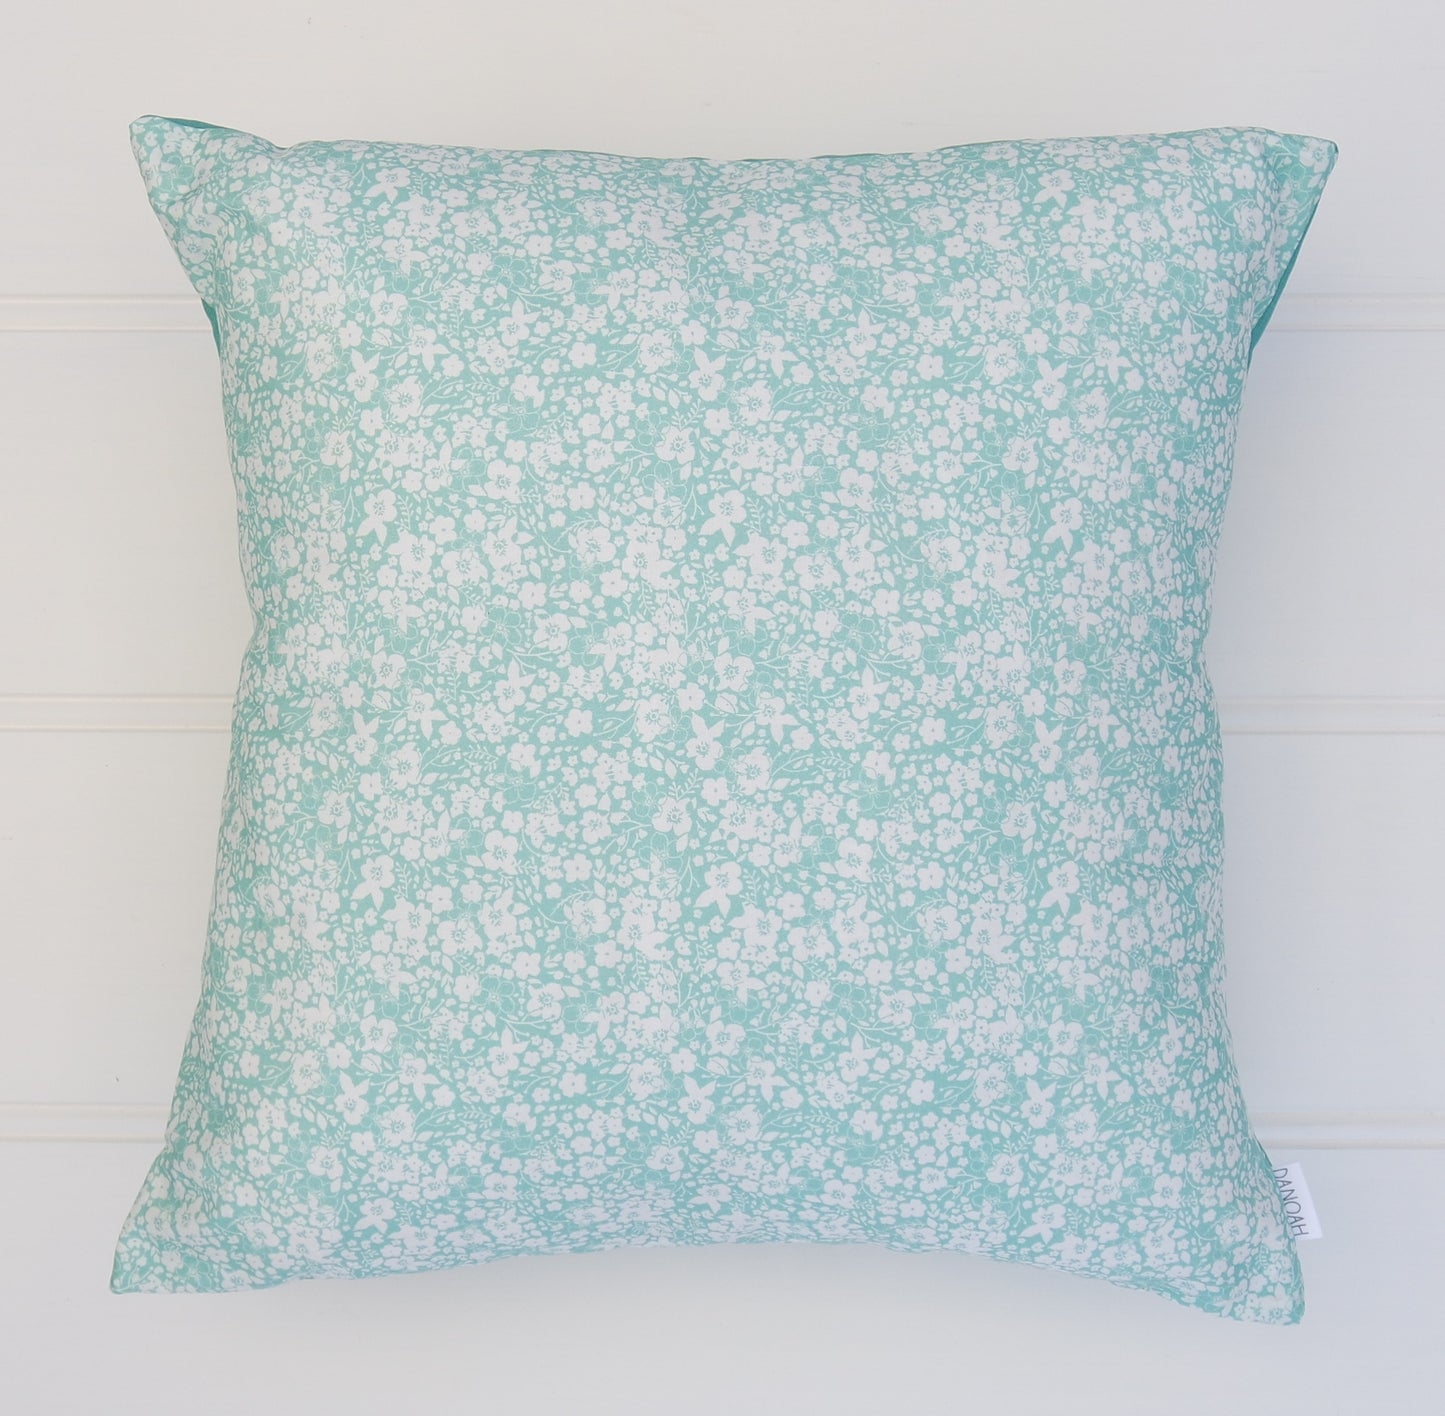 SALE - Aqua Floral Cushion Cover